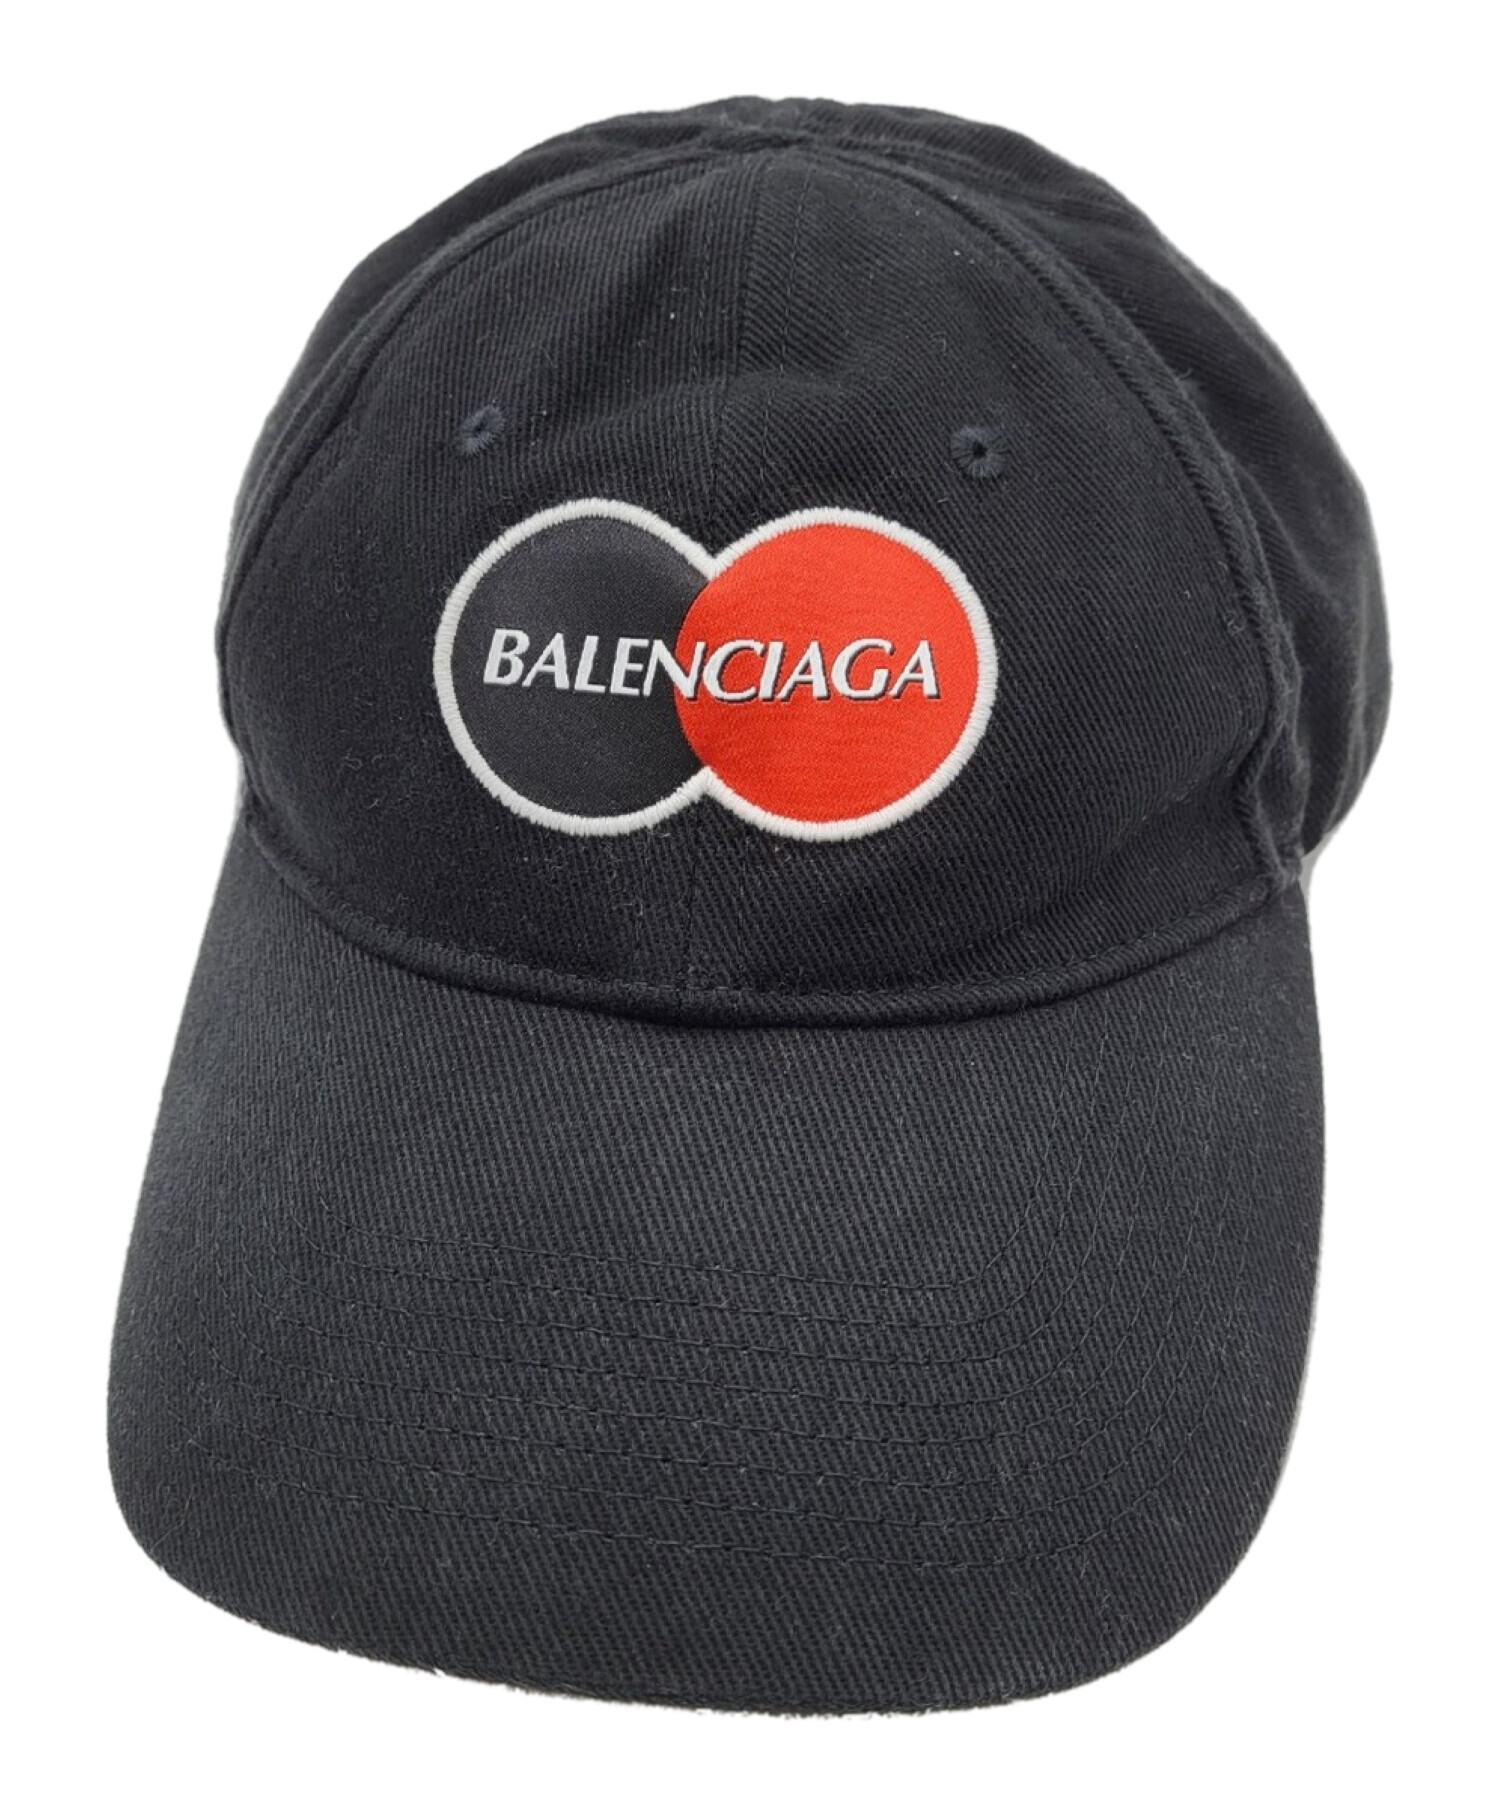 BALENCIAGA (バレンシアガ) キャップ ブラック